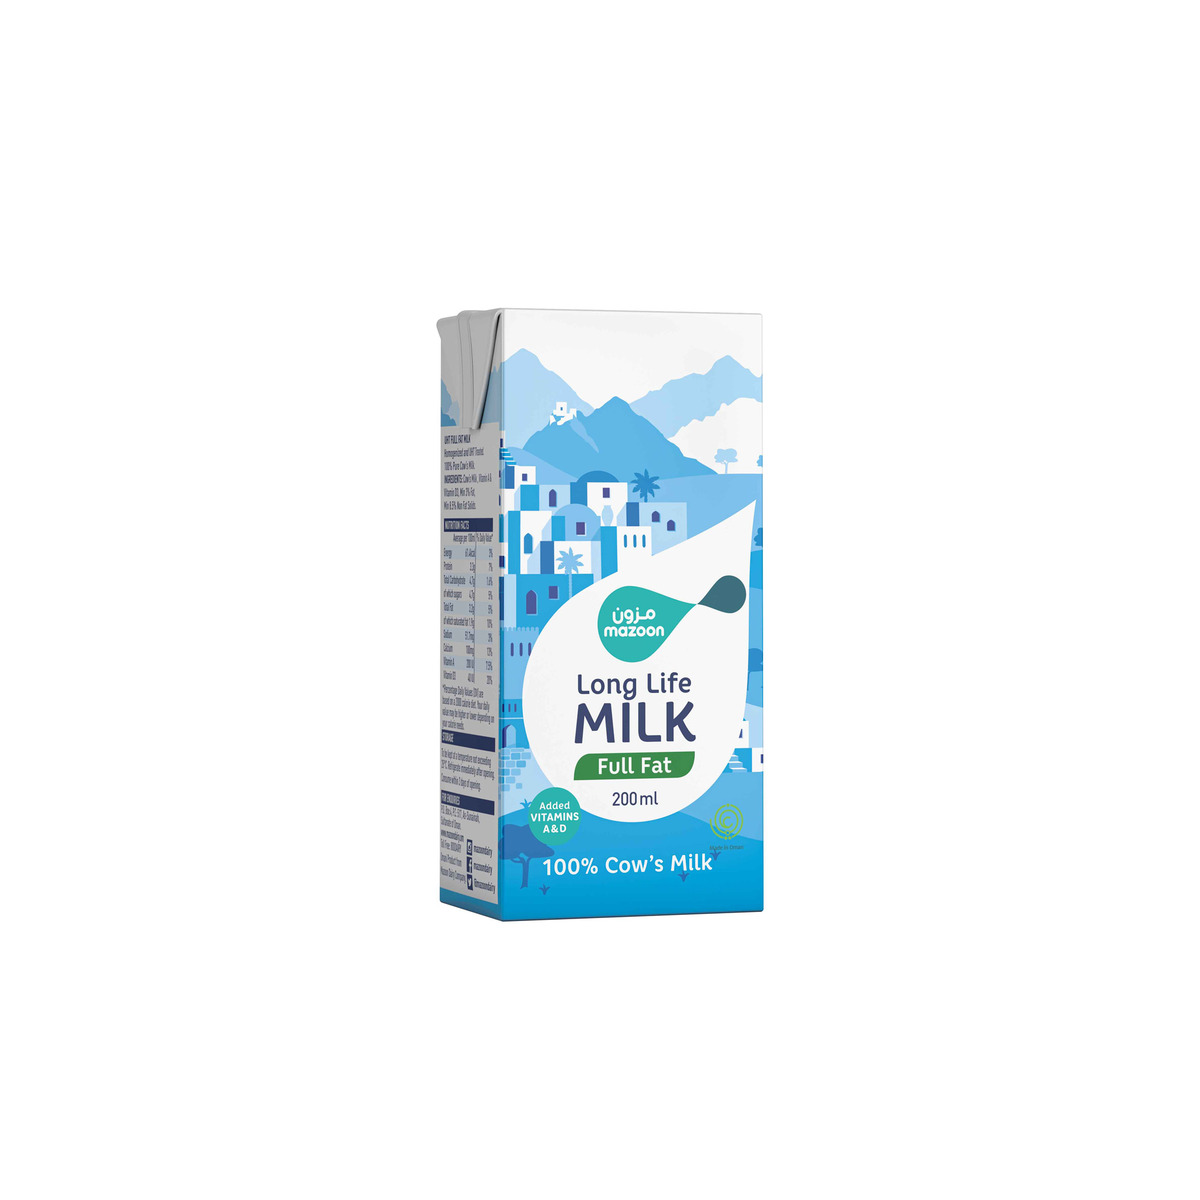 Mazoon Long Life Full Fat Milk 200 ml